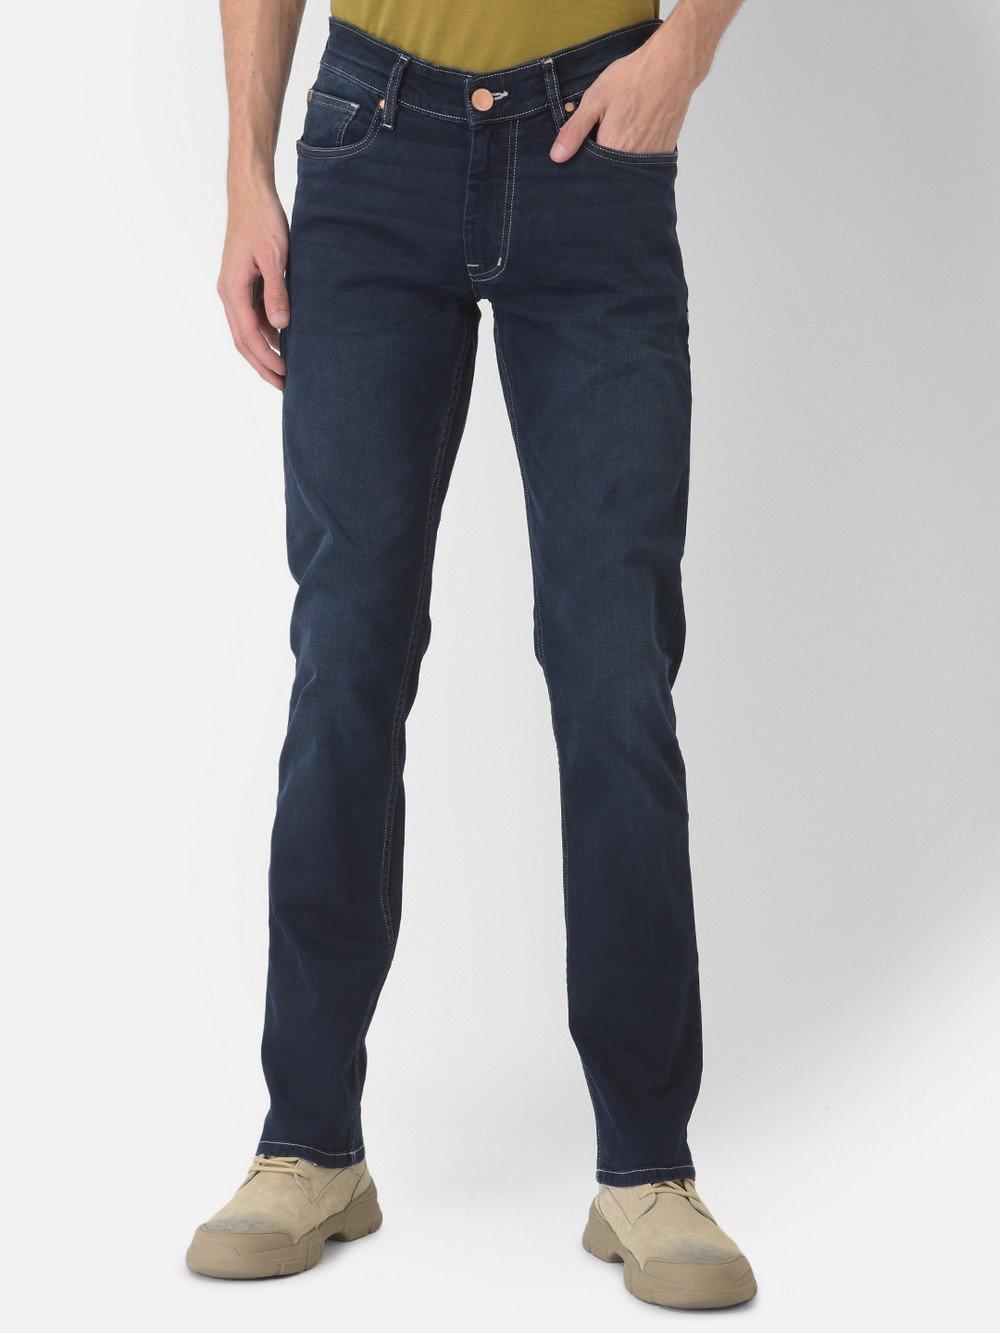 Buy Dark Blue Classic Slim Men's Jeans Online